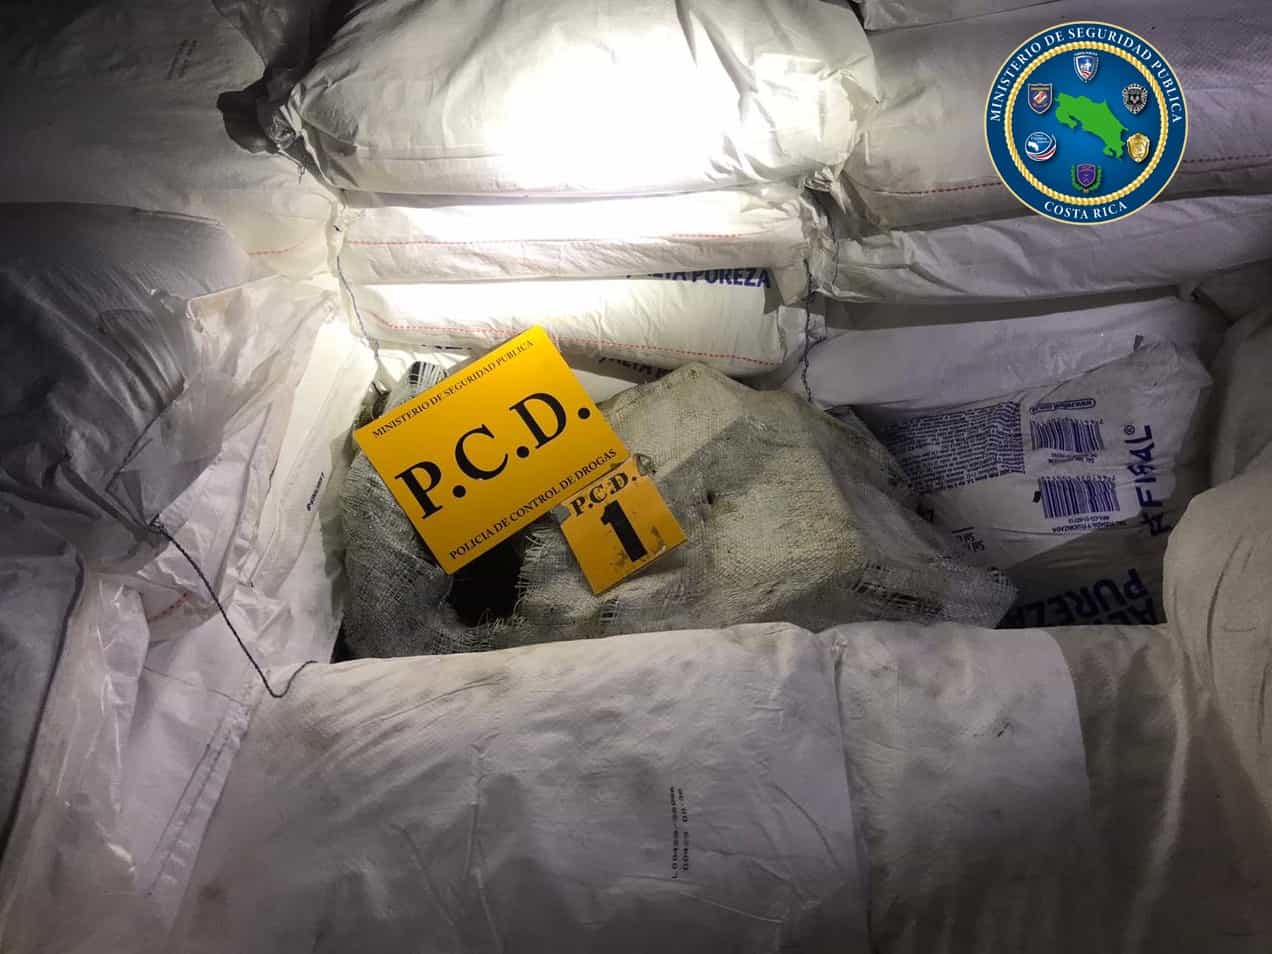 Cocaine in salt bags